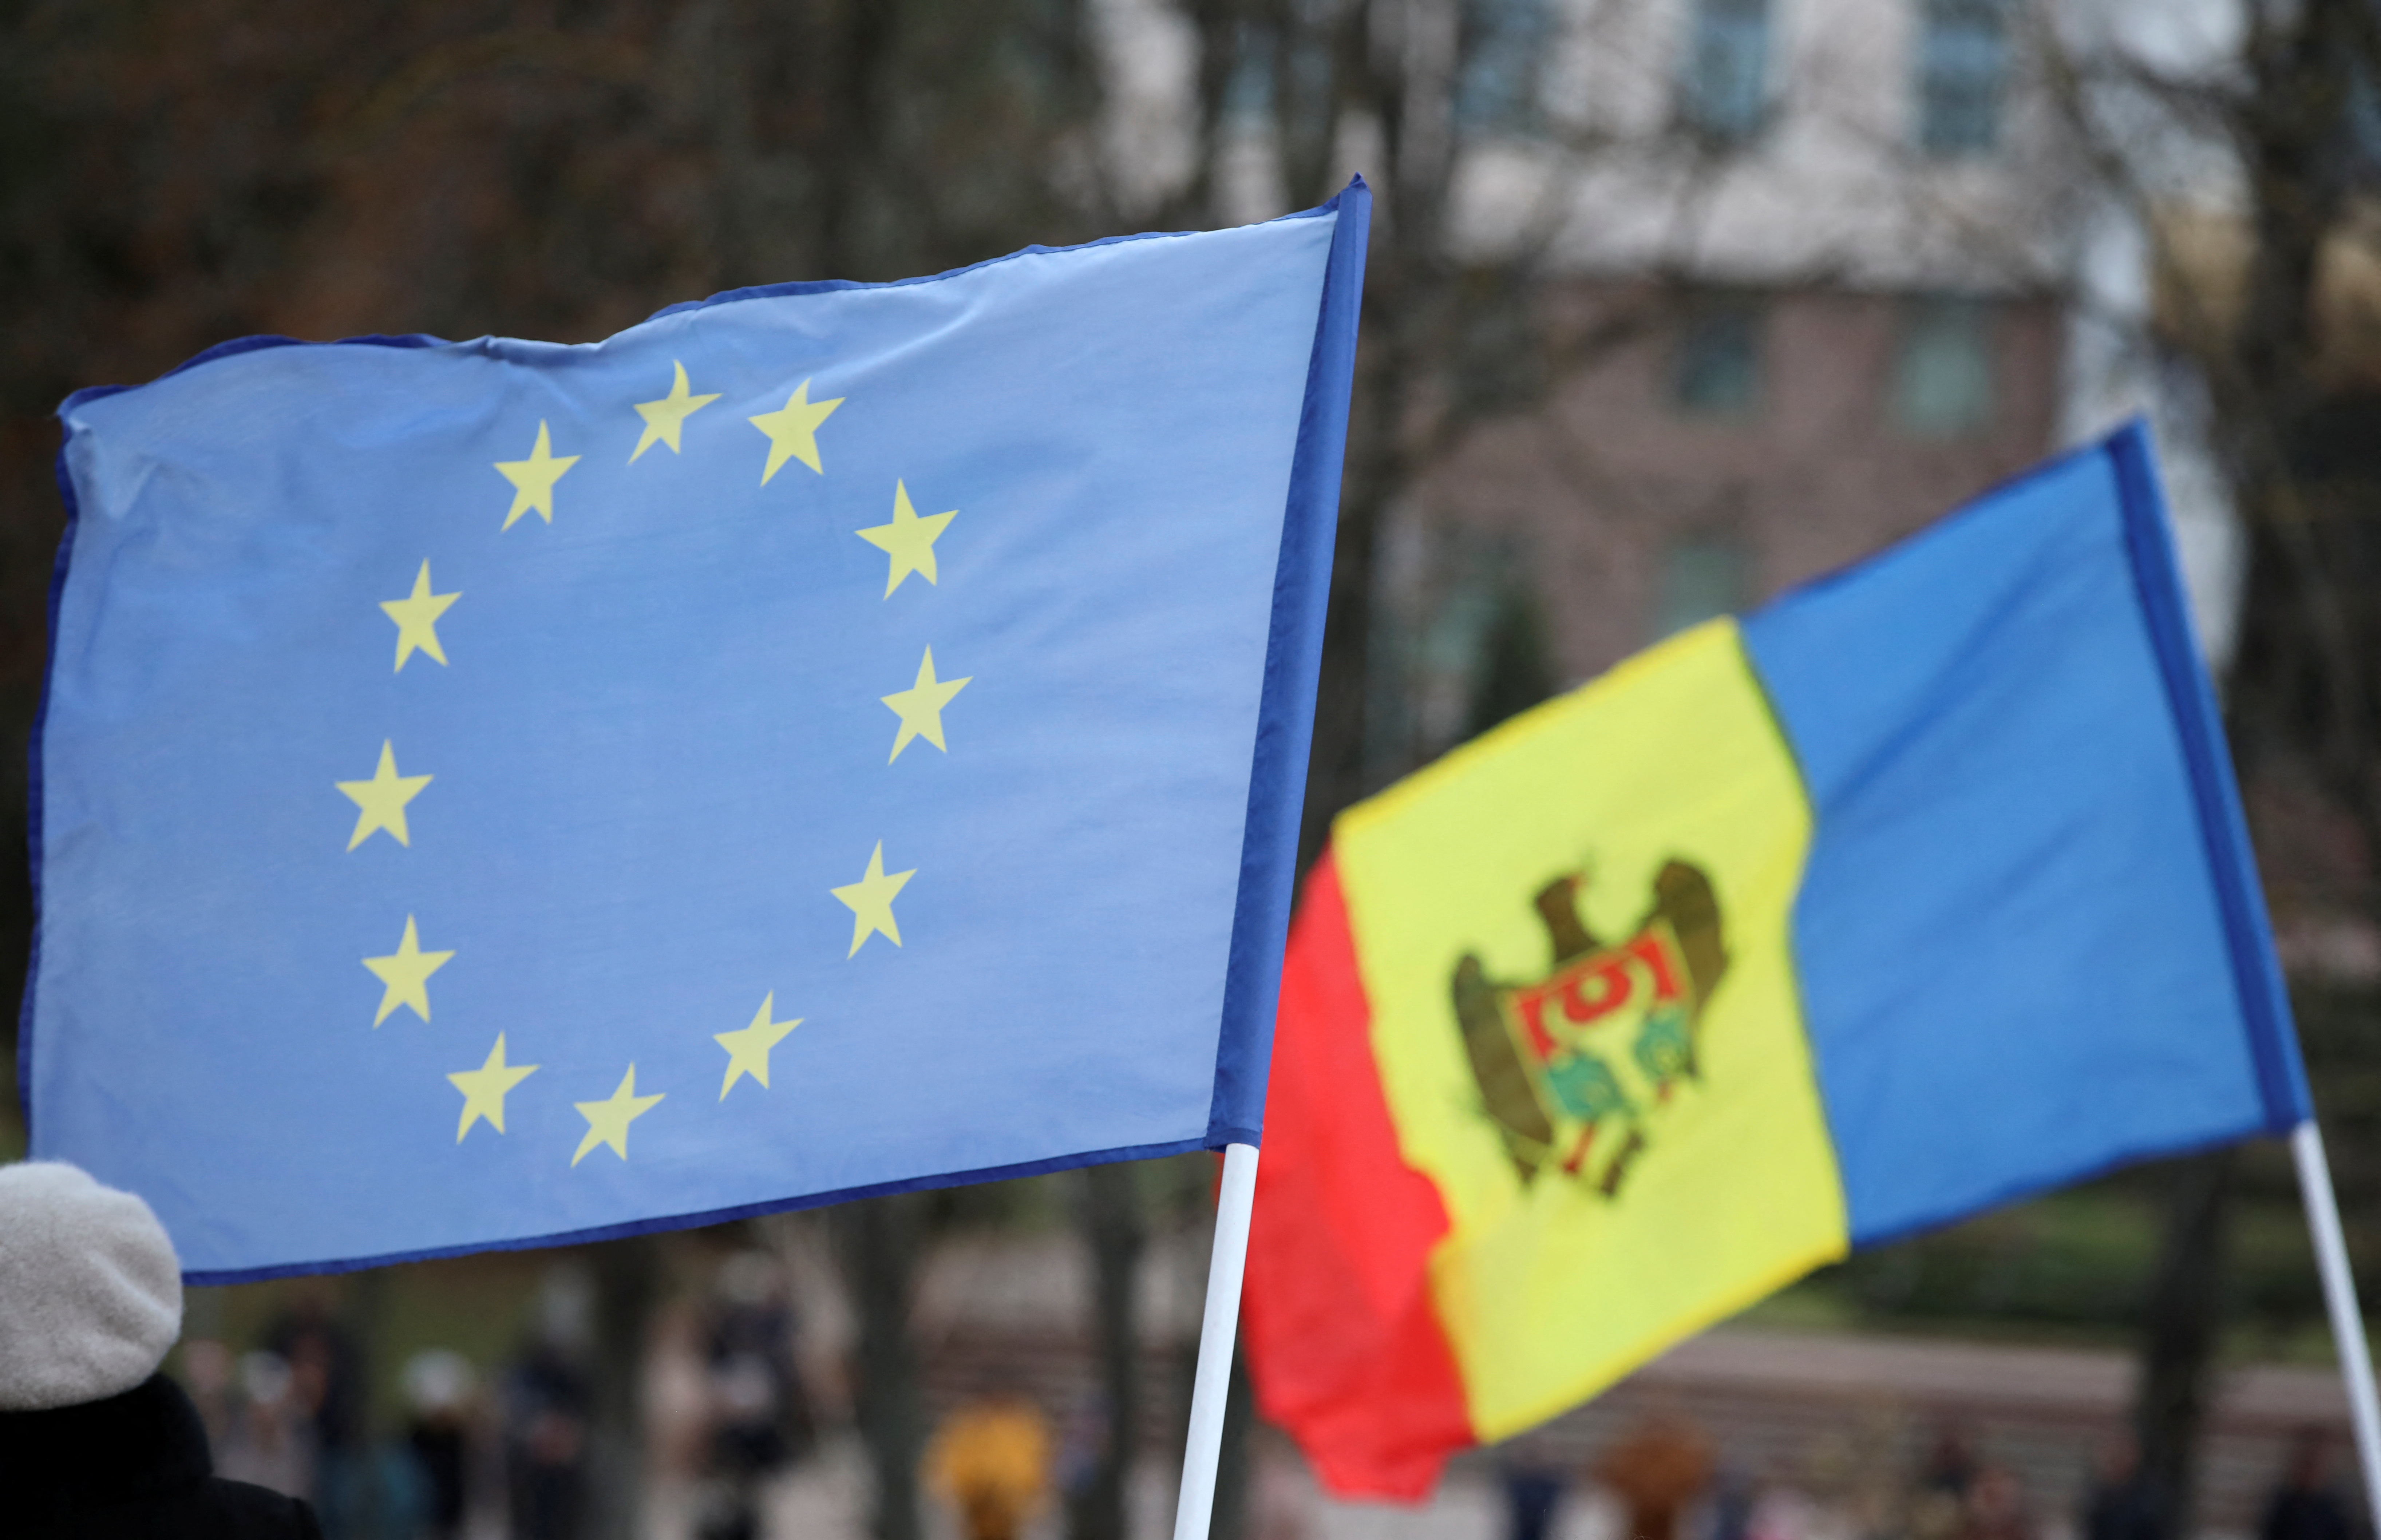 Moldovans celebrate decision to open membership talks with EU